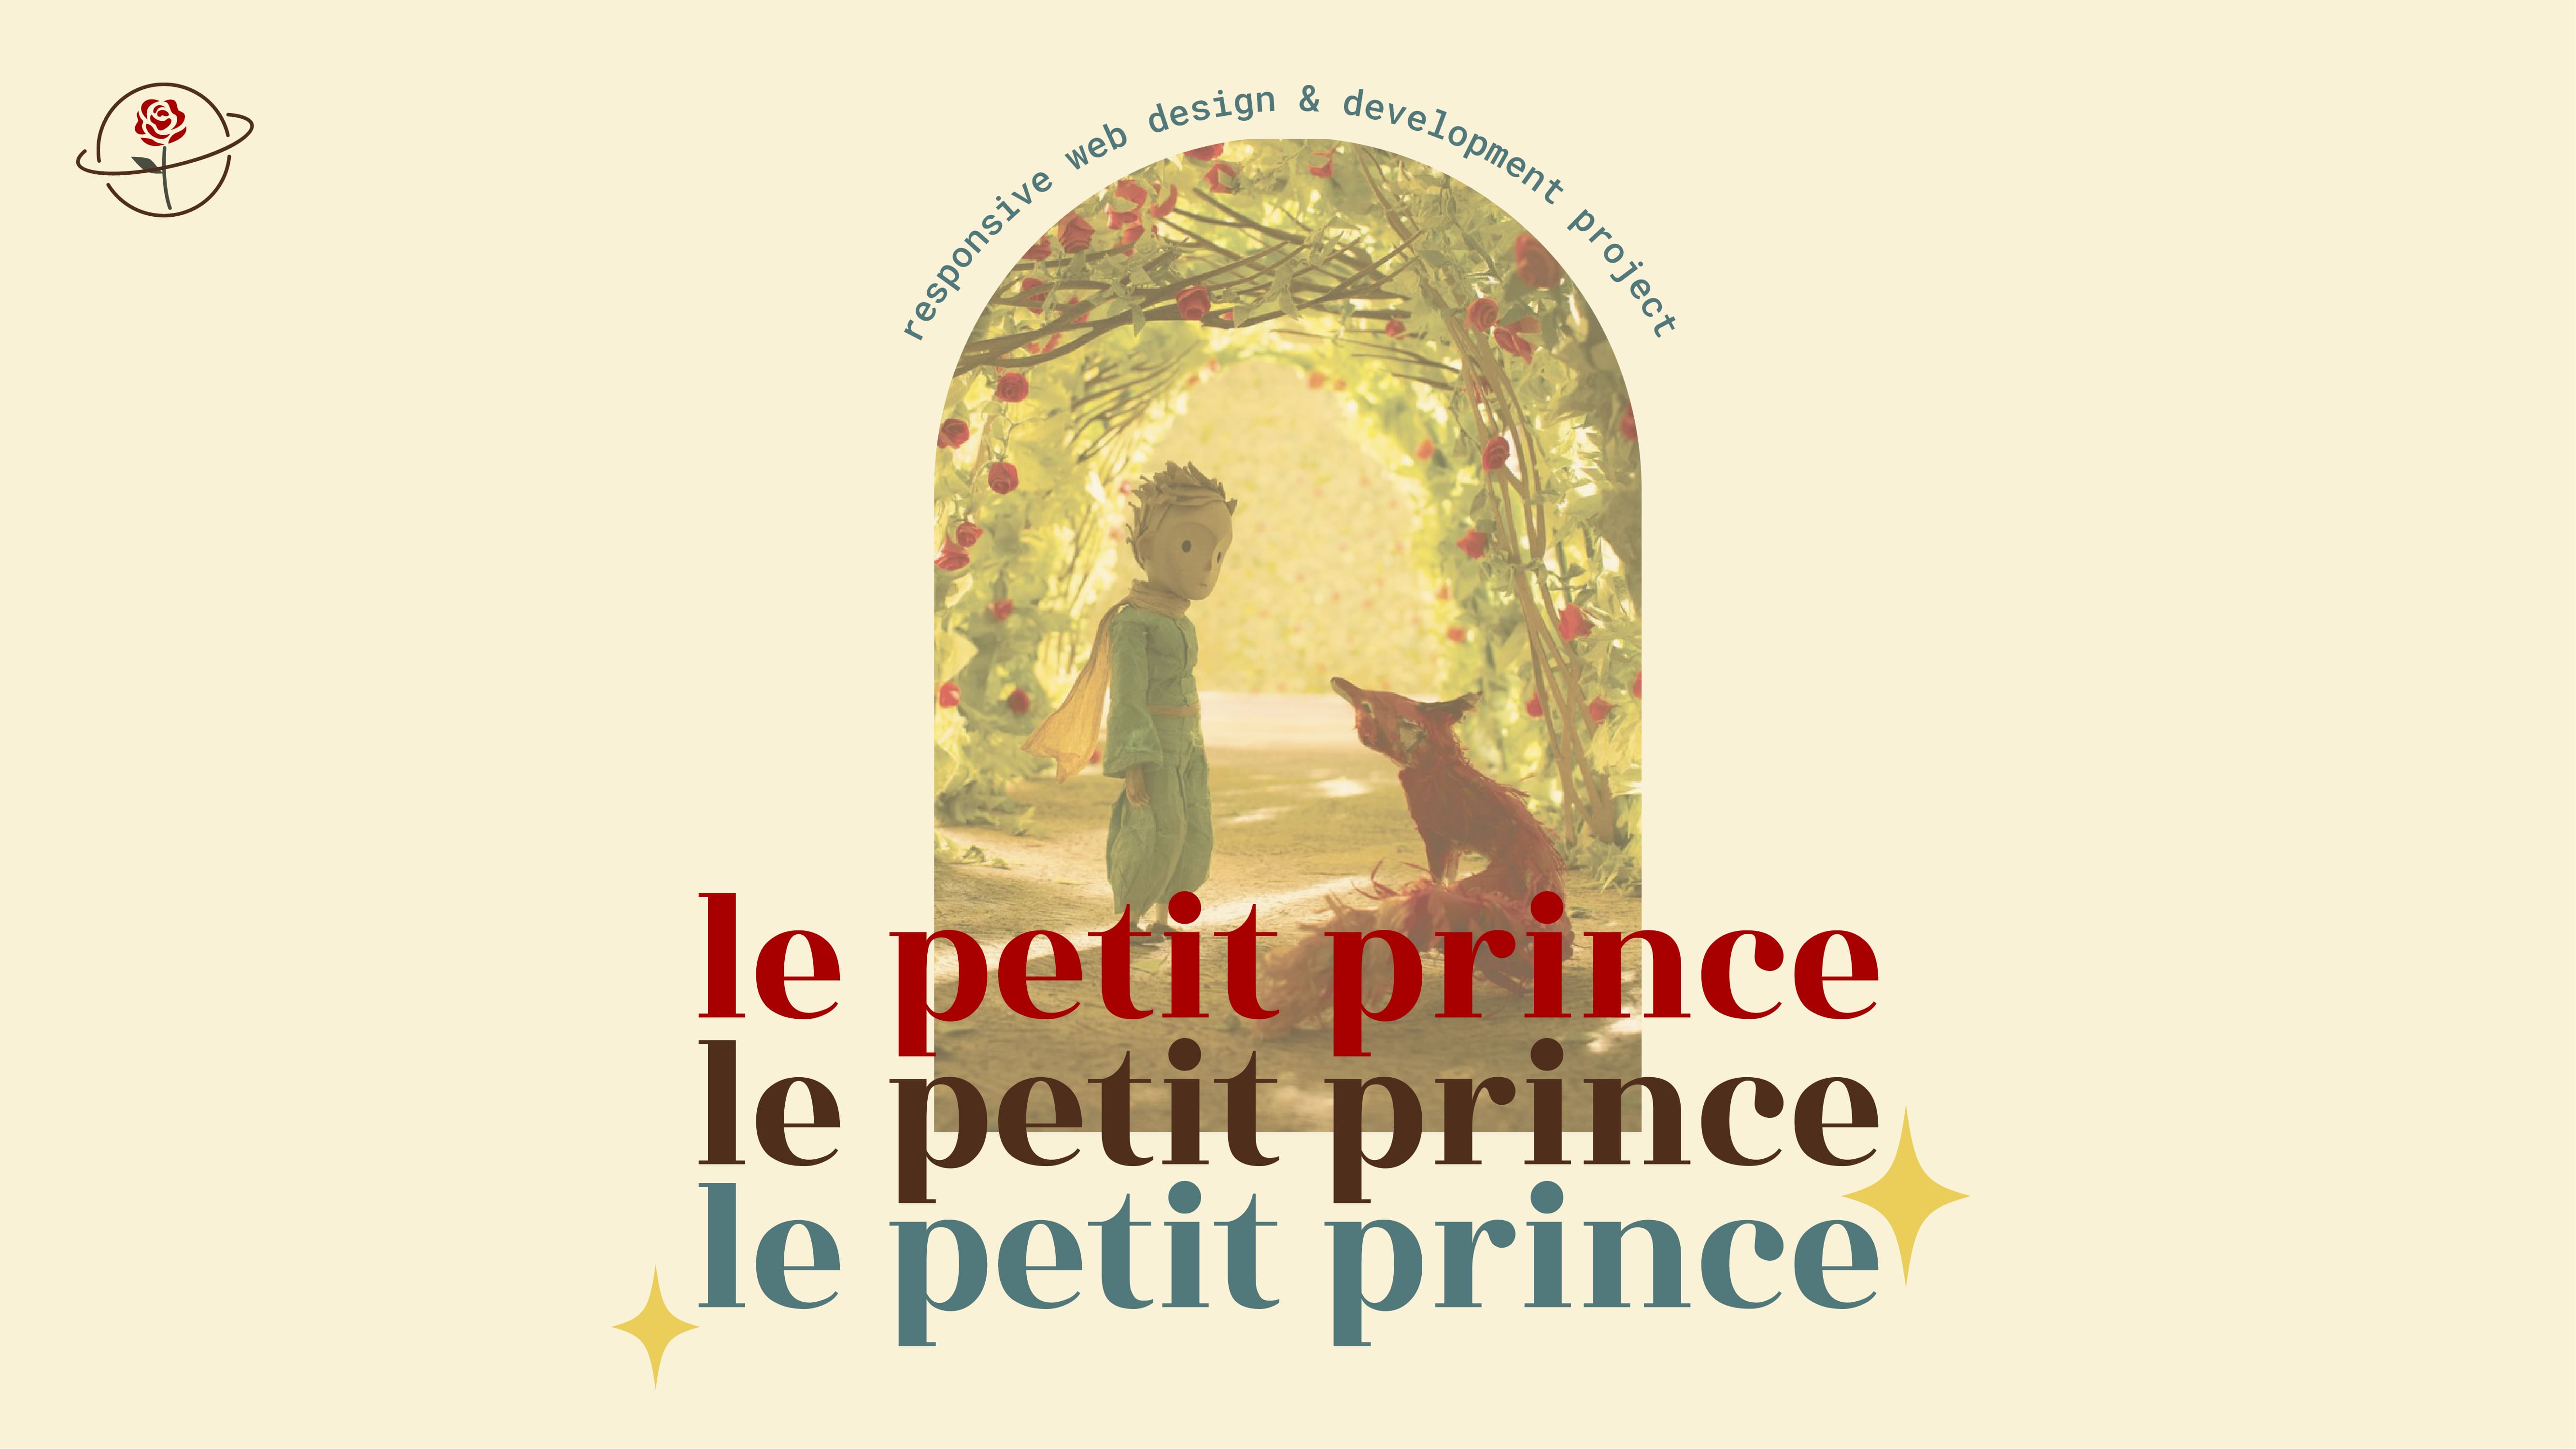 the little prince website design ux ui front end development banner image